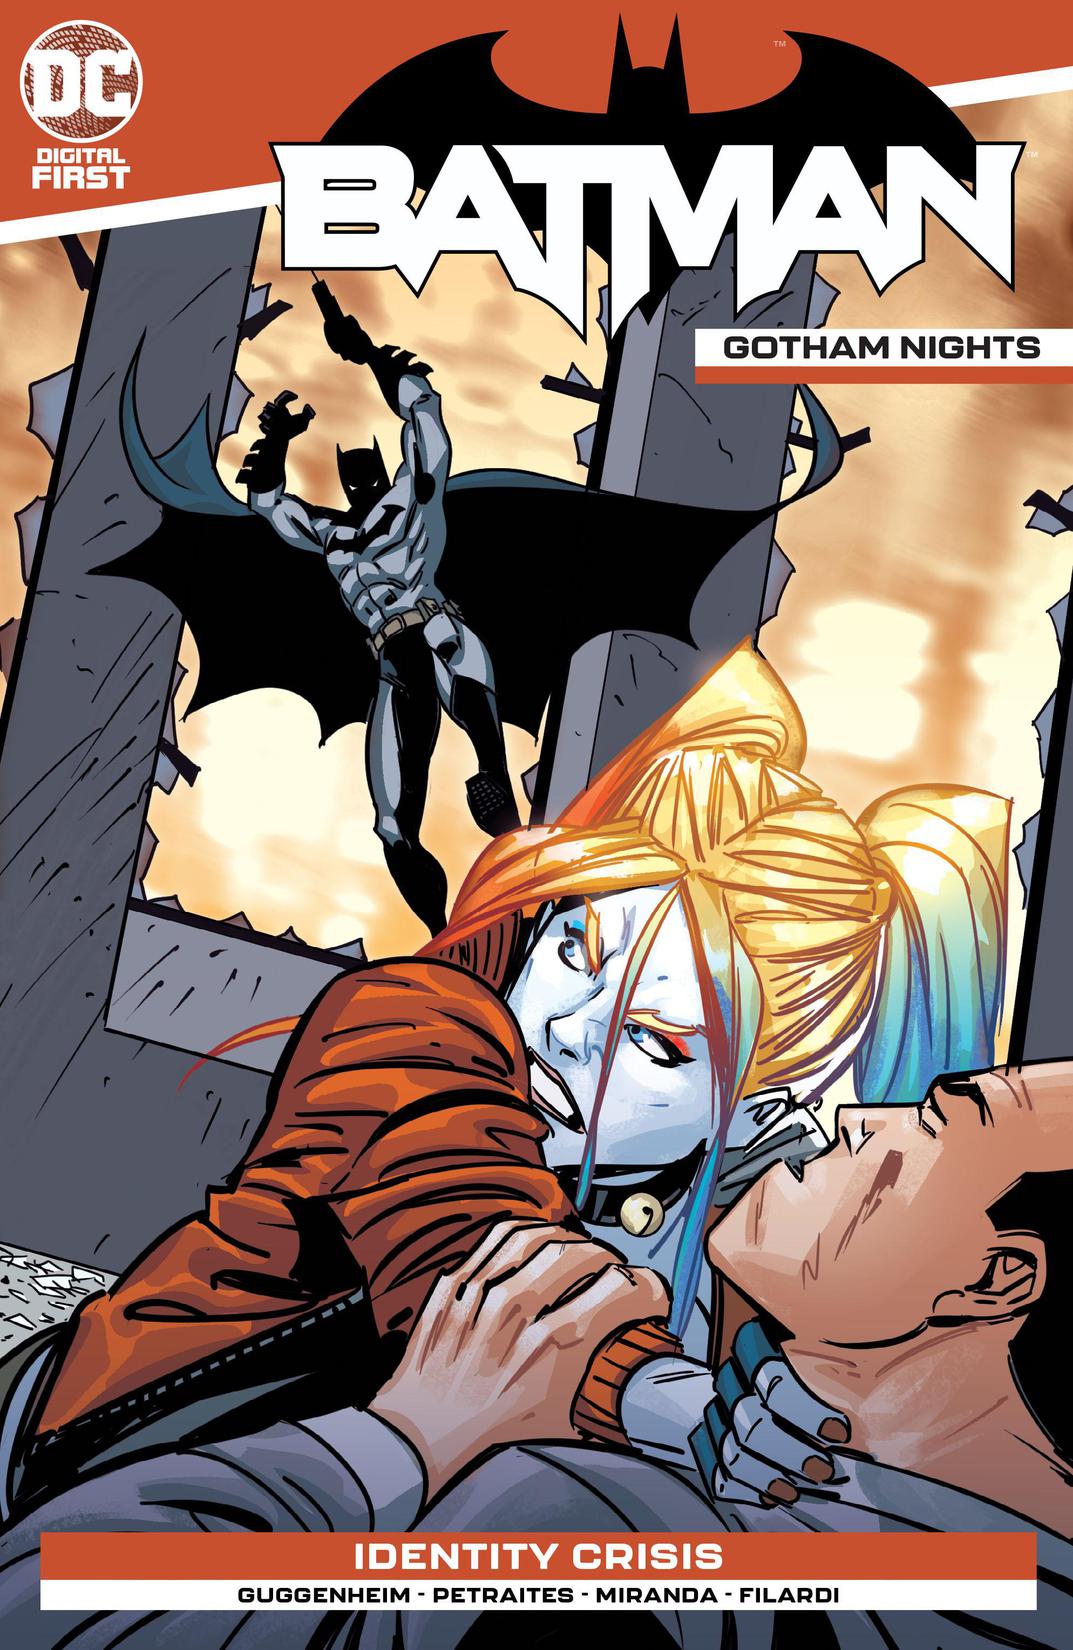 Batman: Gotham Nights #20 preview images